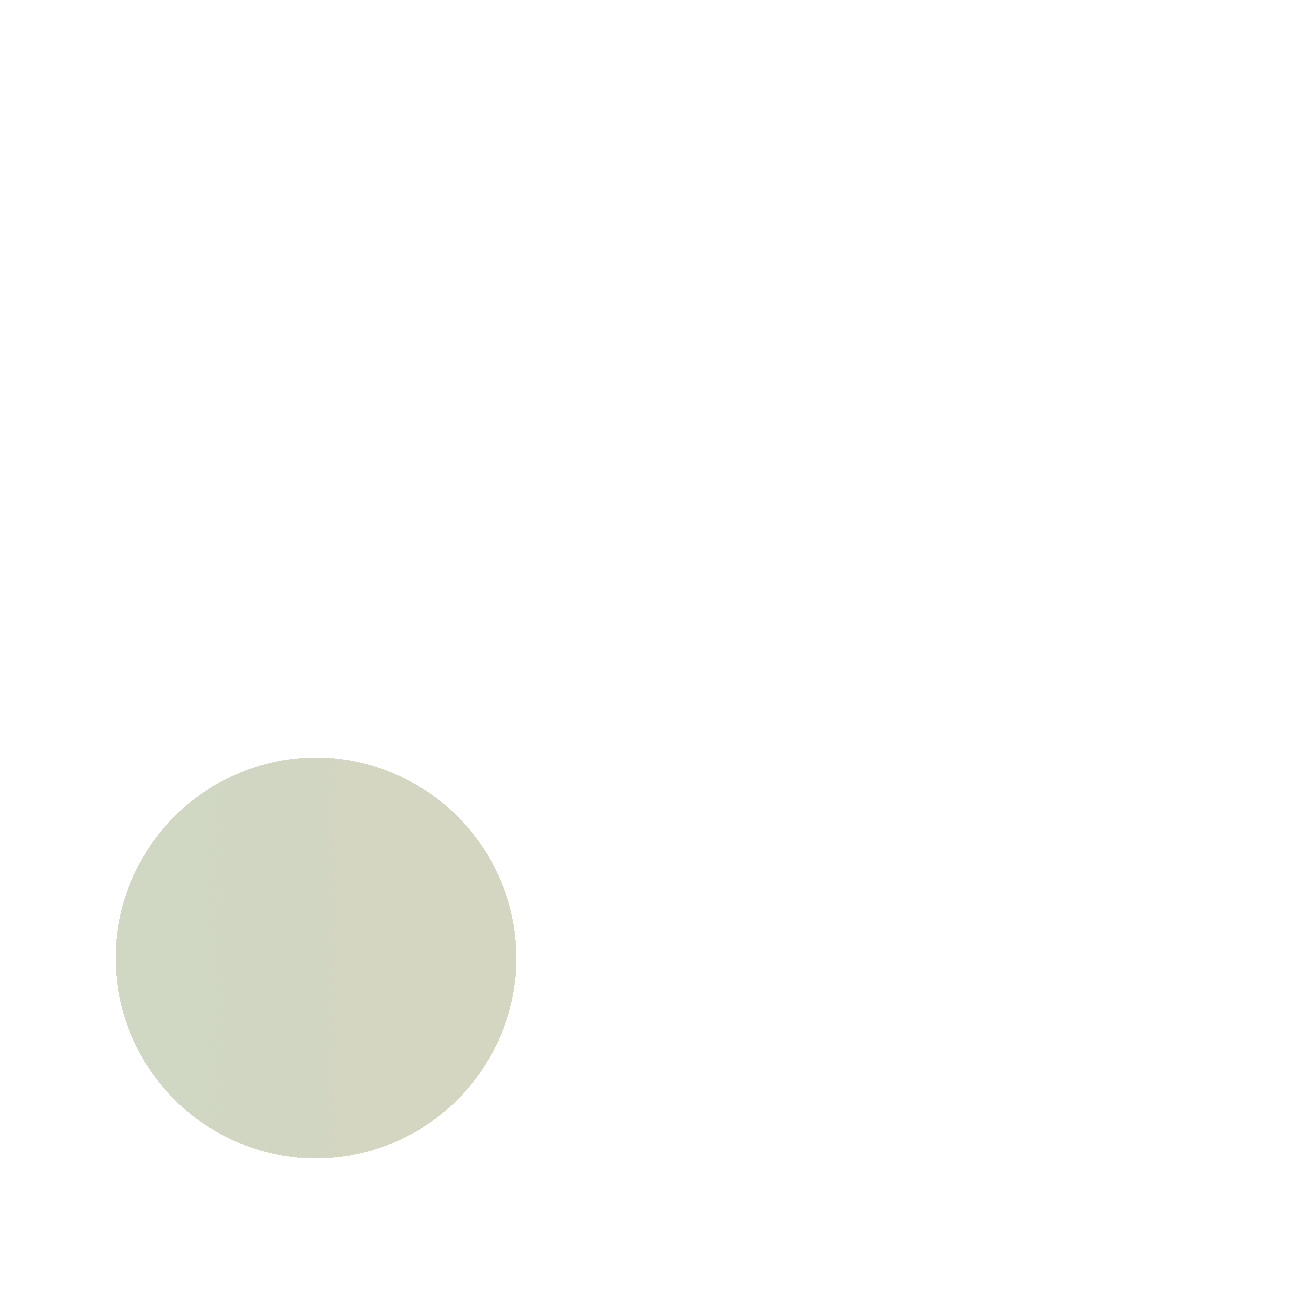 Cercle vert 1